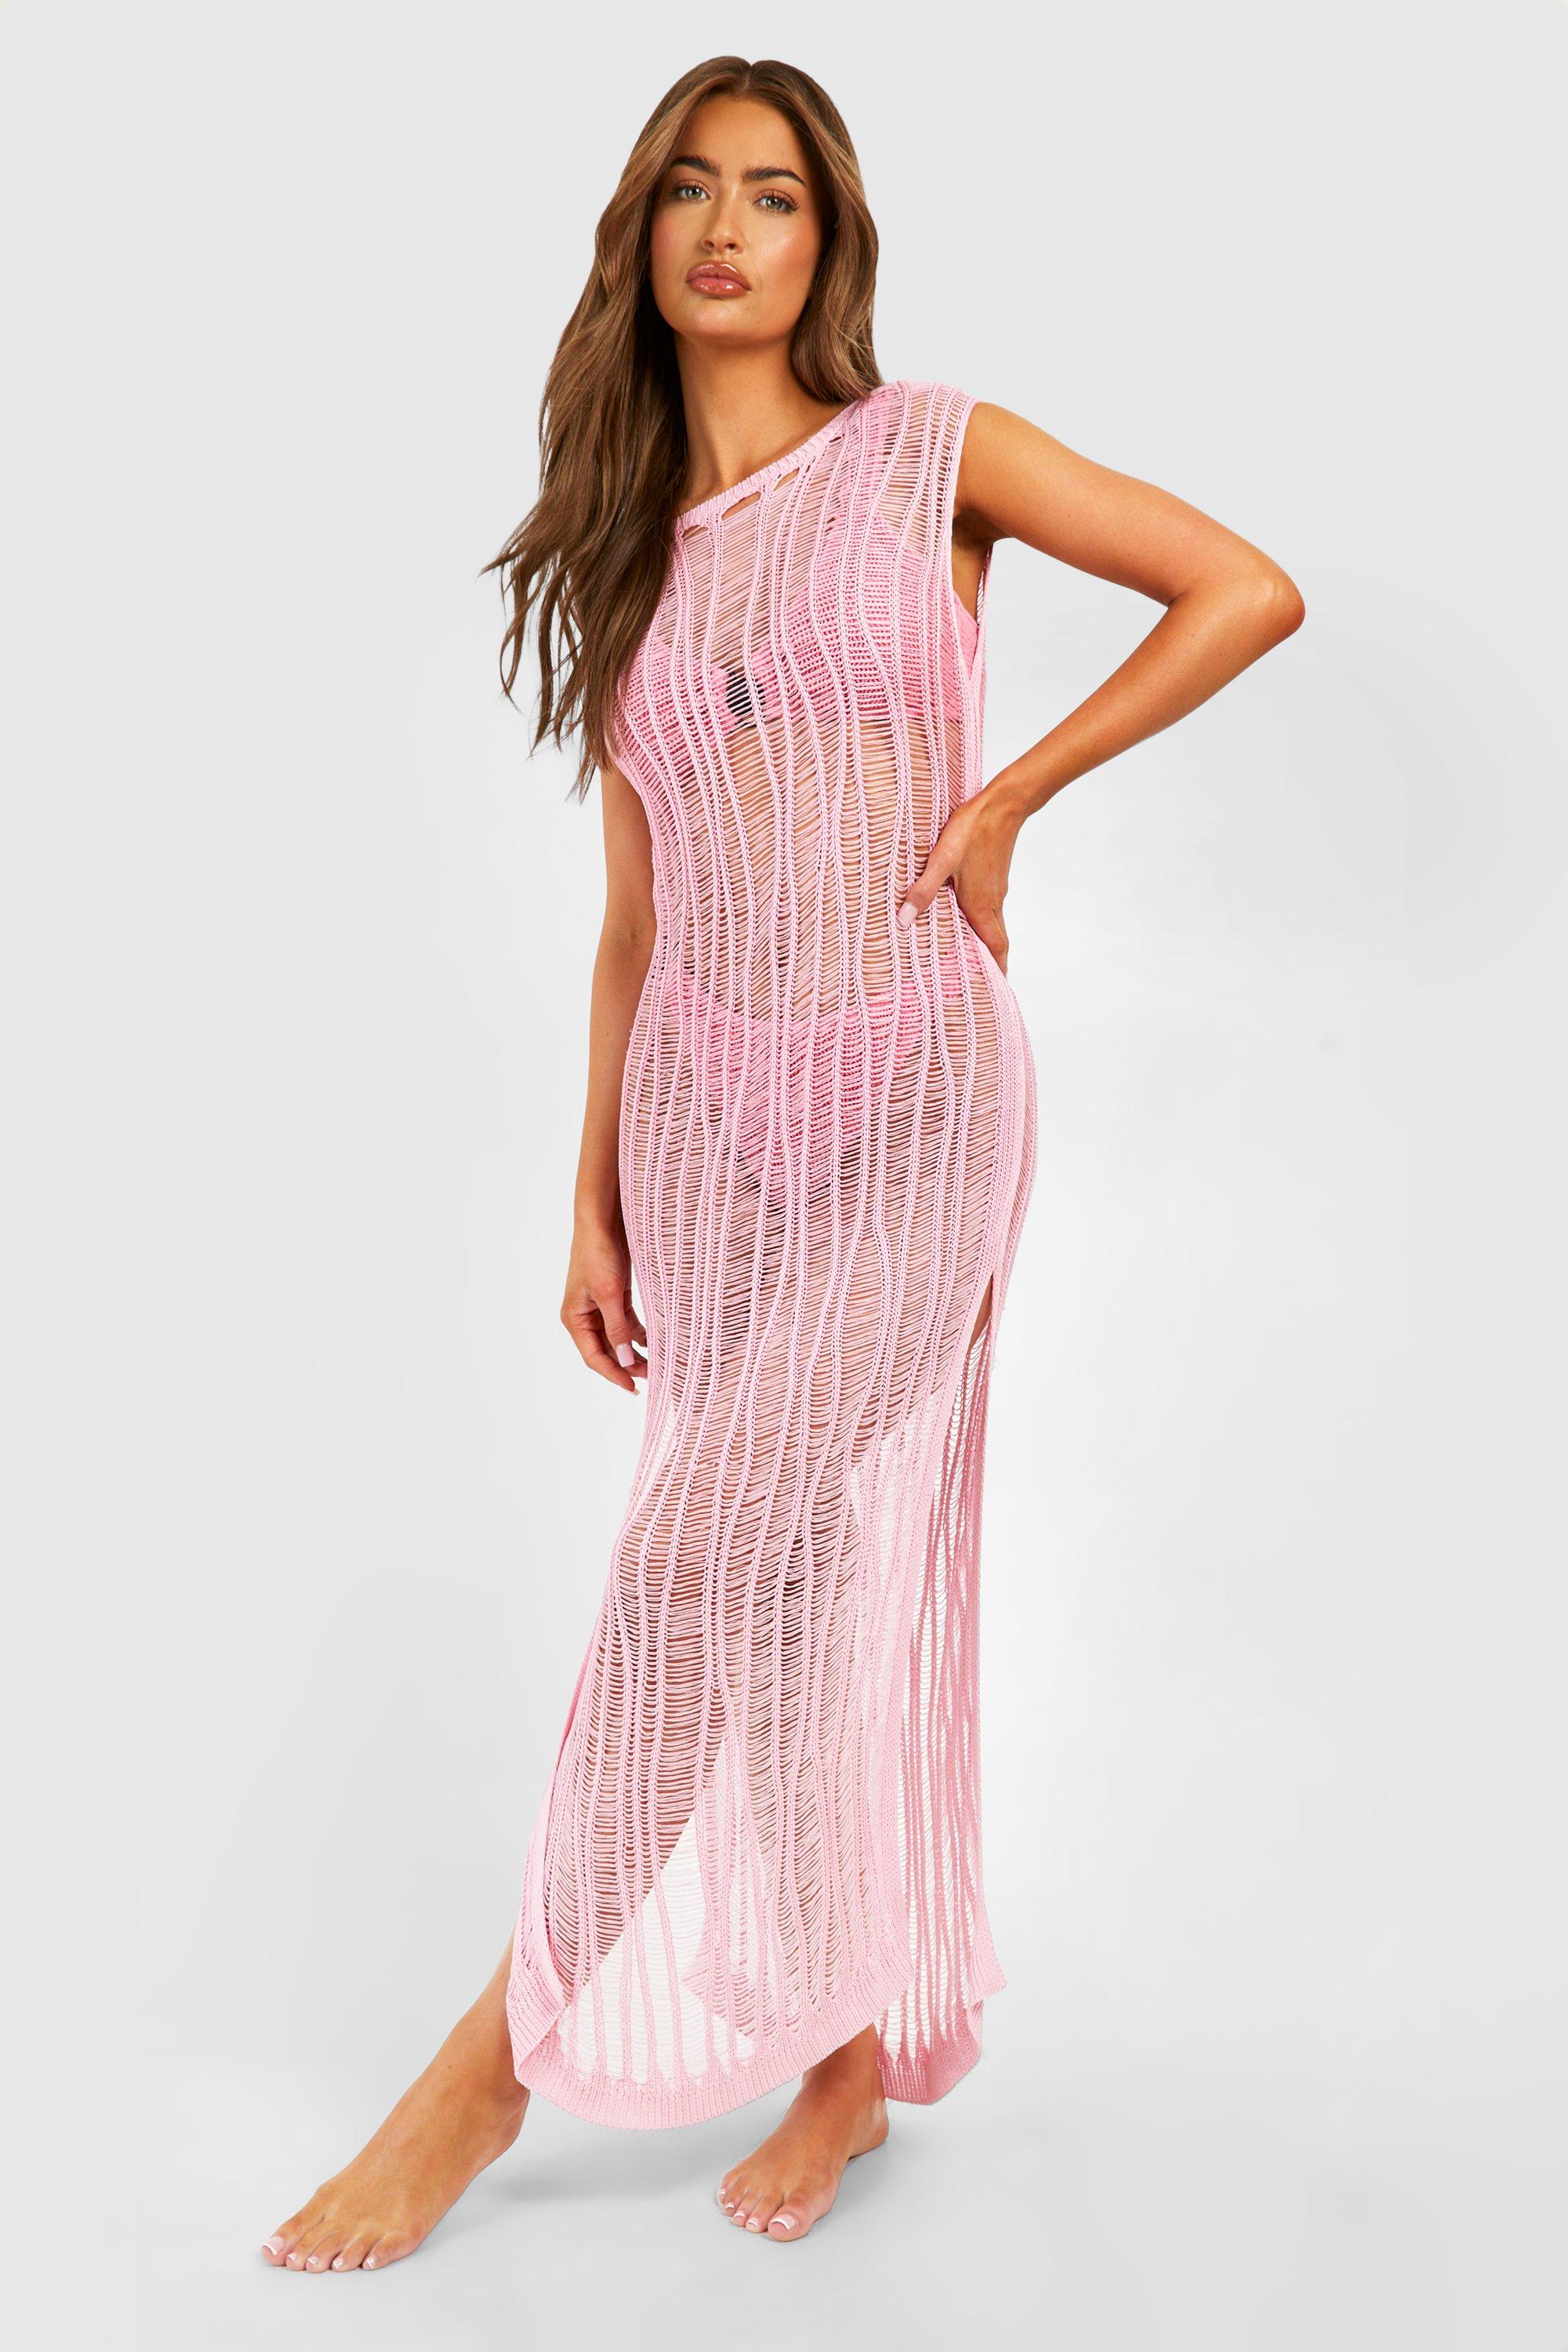 Image of Ladder Crochet Cover-up Beach Maxi Dress, Pink